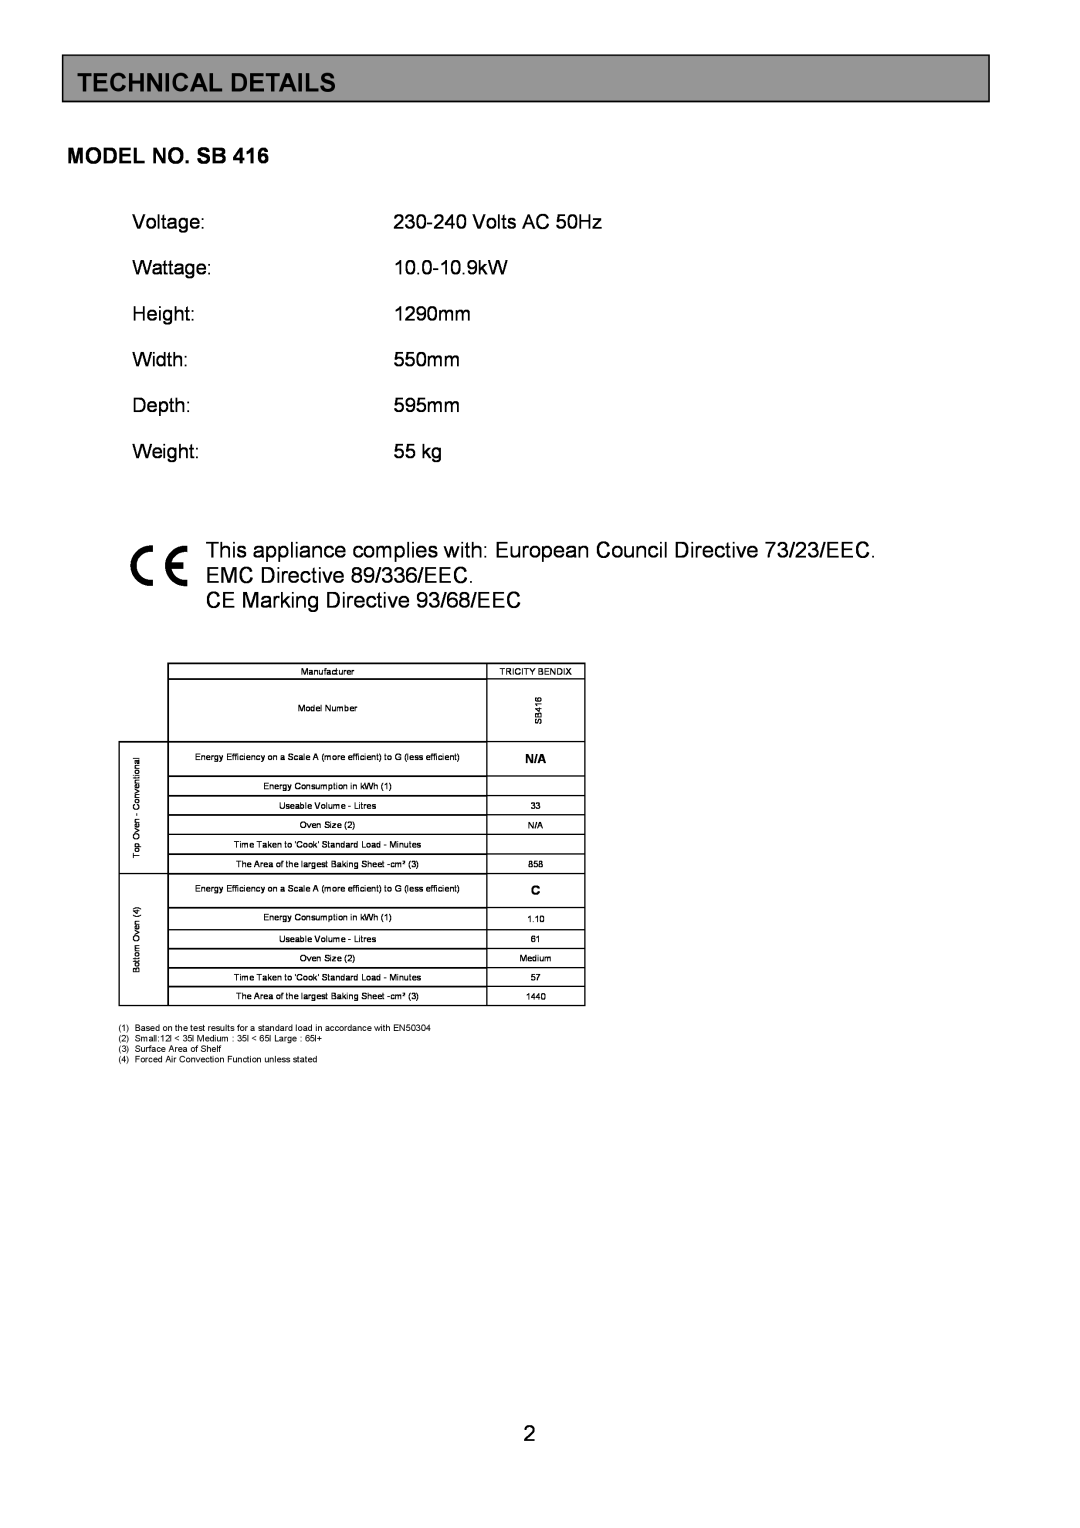 Tricity Bendix SB416 Technical Details, Model No. Sb, Voltage, 230-240Volts AC 50Hz, Depth 595mm, Weight, 55 kg 